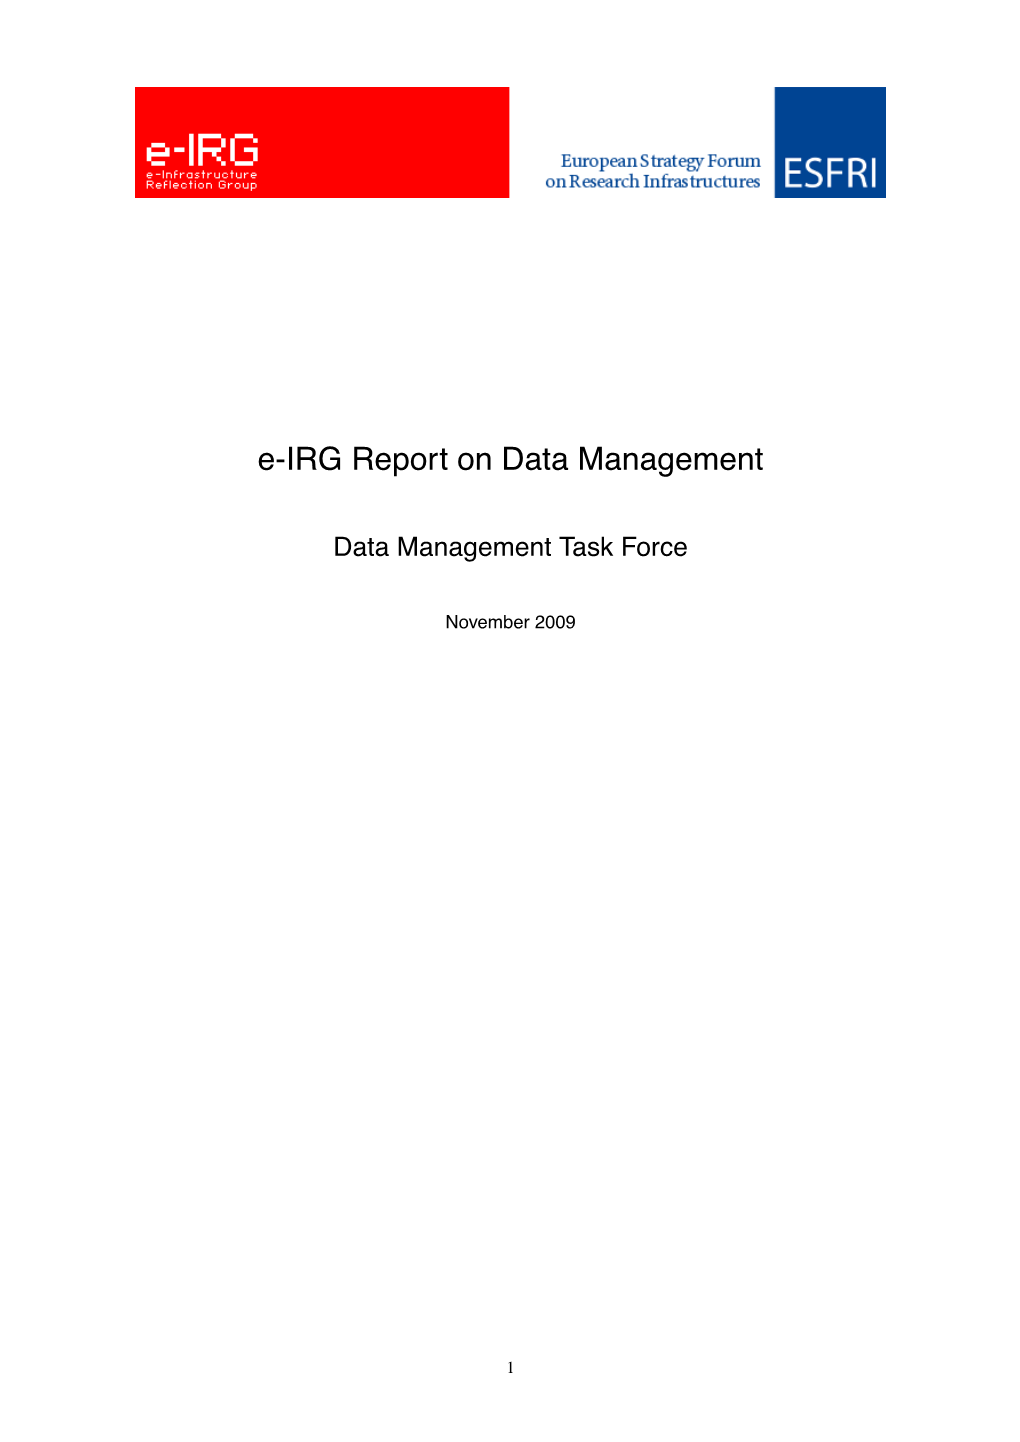 ESFRI / E-IRG Report on Data Management, January 2010